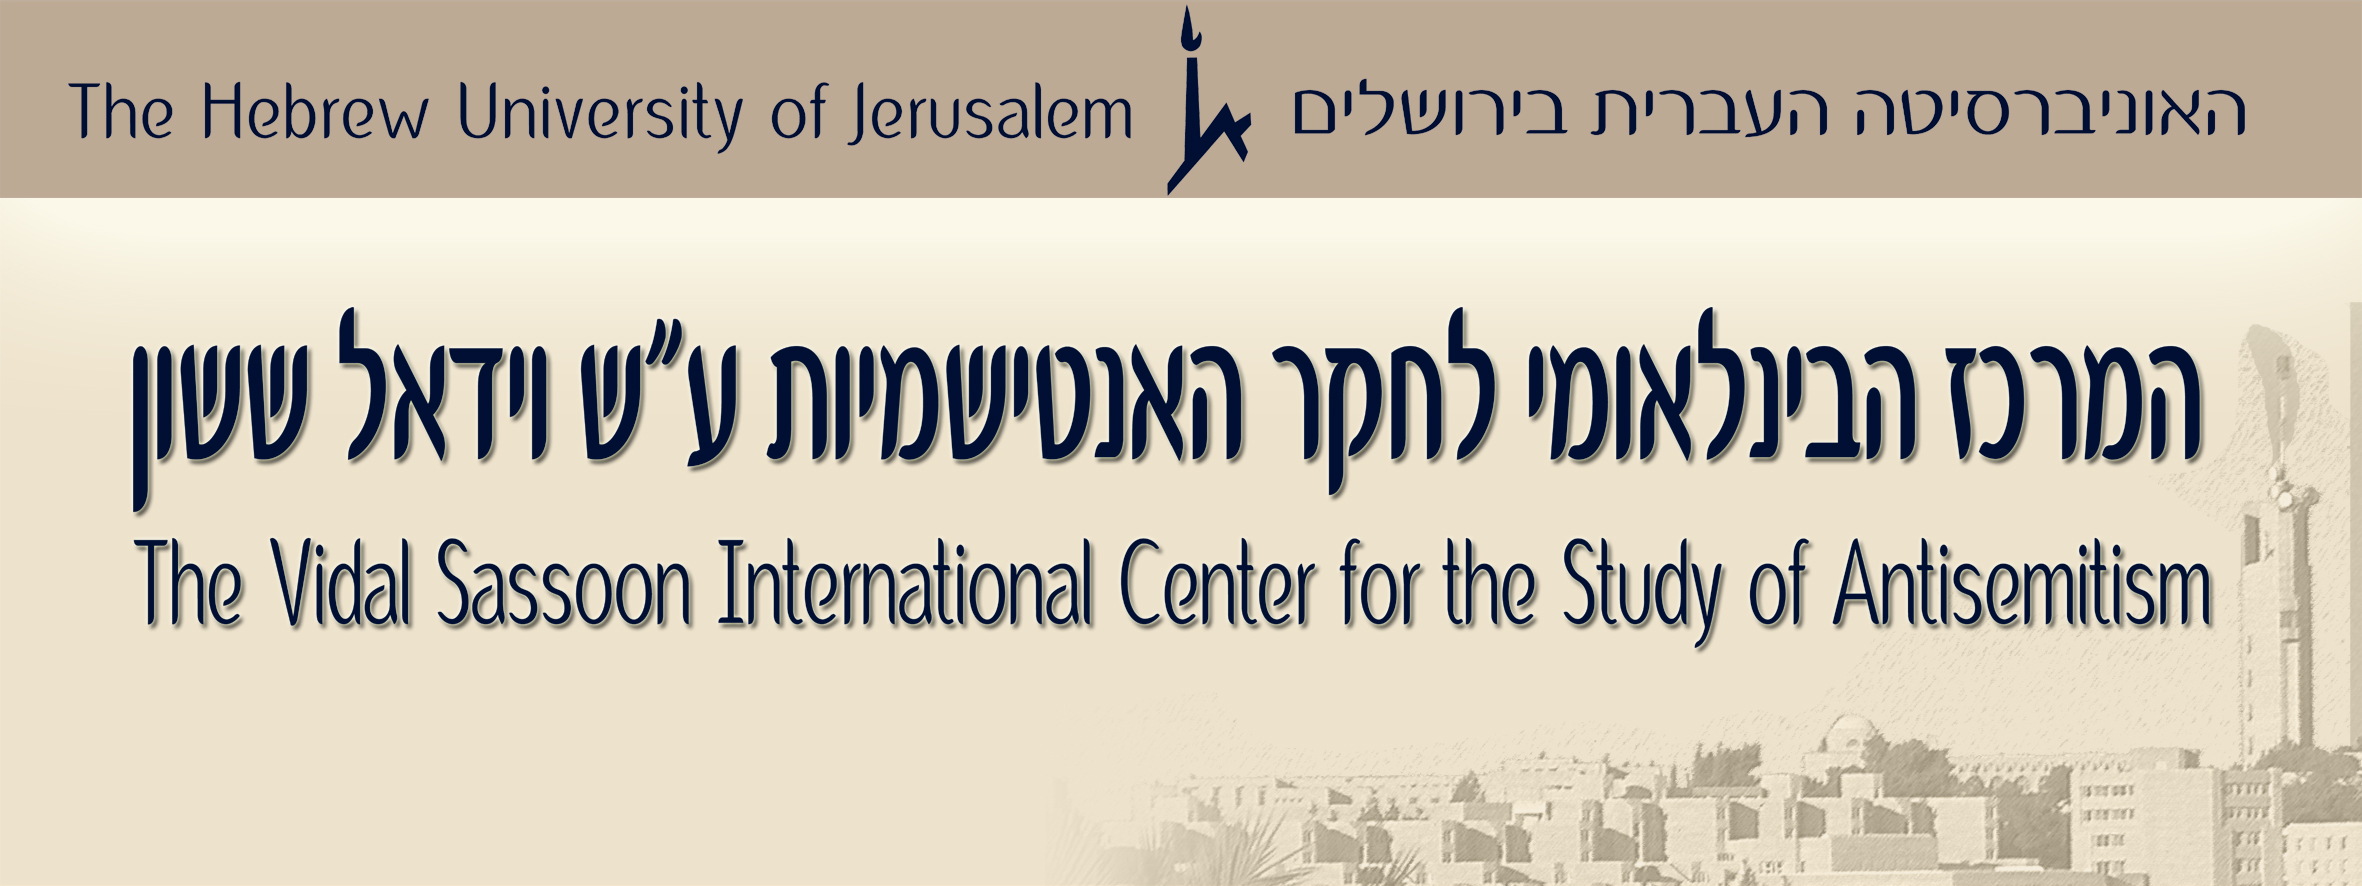 The Vidal Sassoon International Center for the Study of Antisemitism